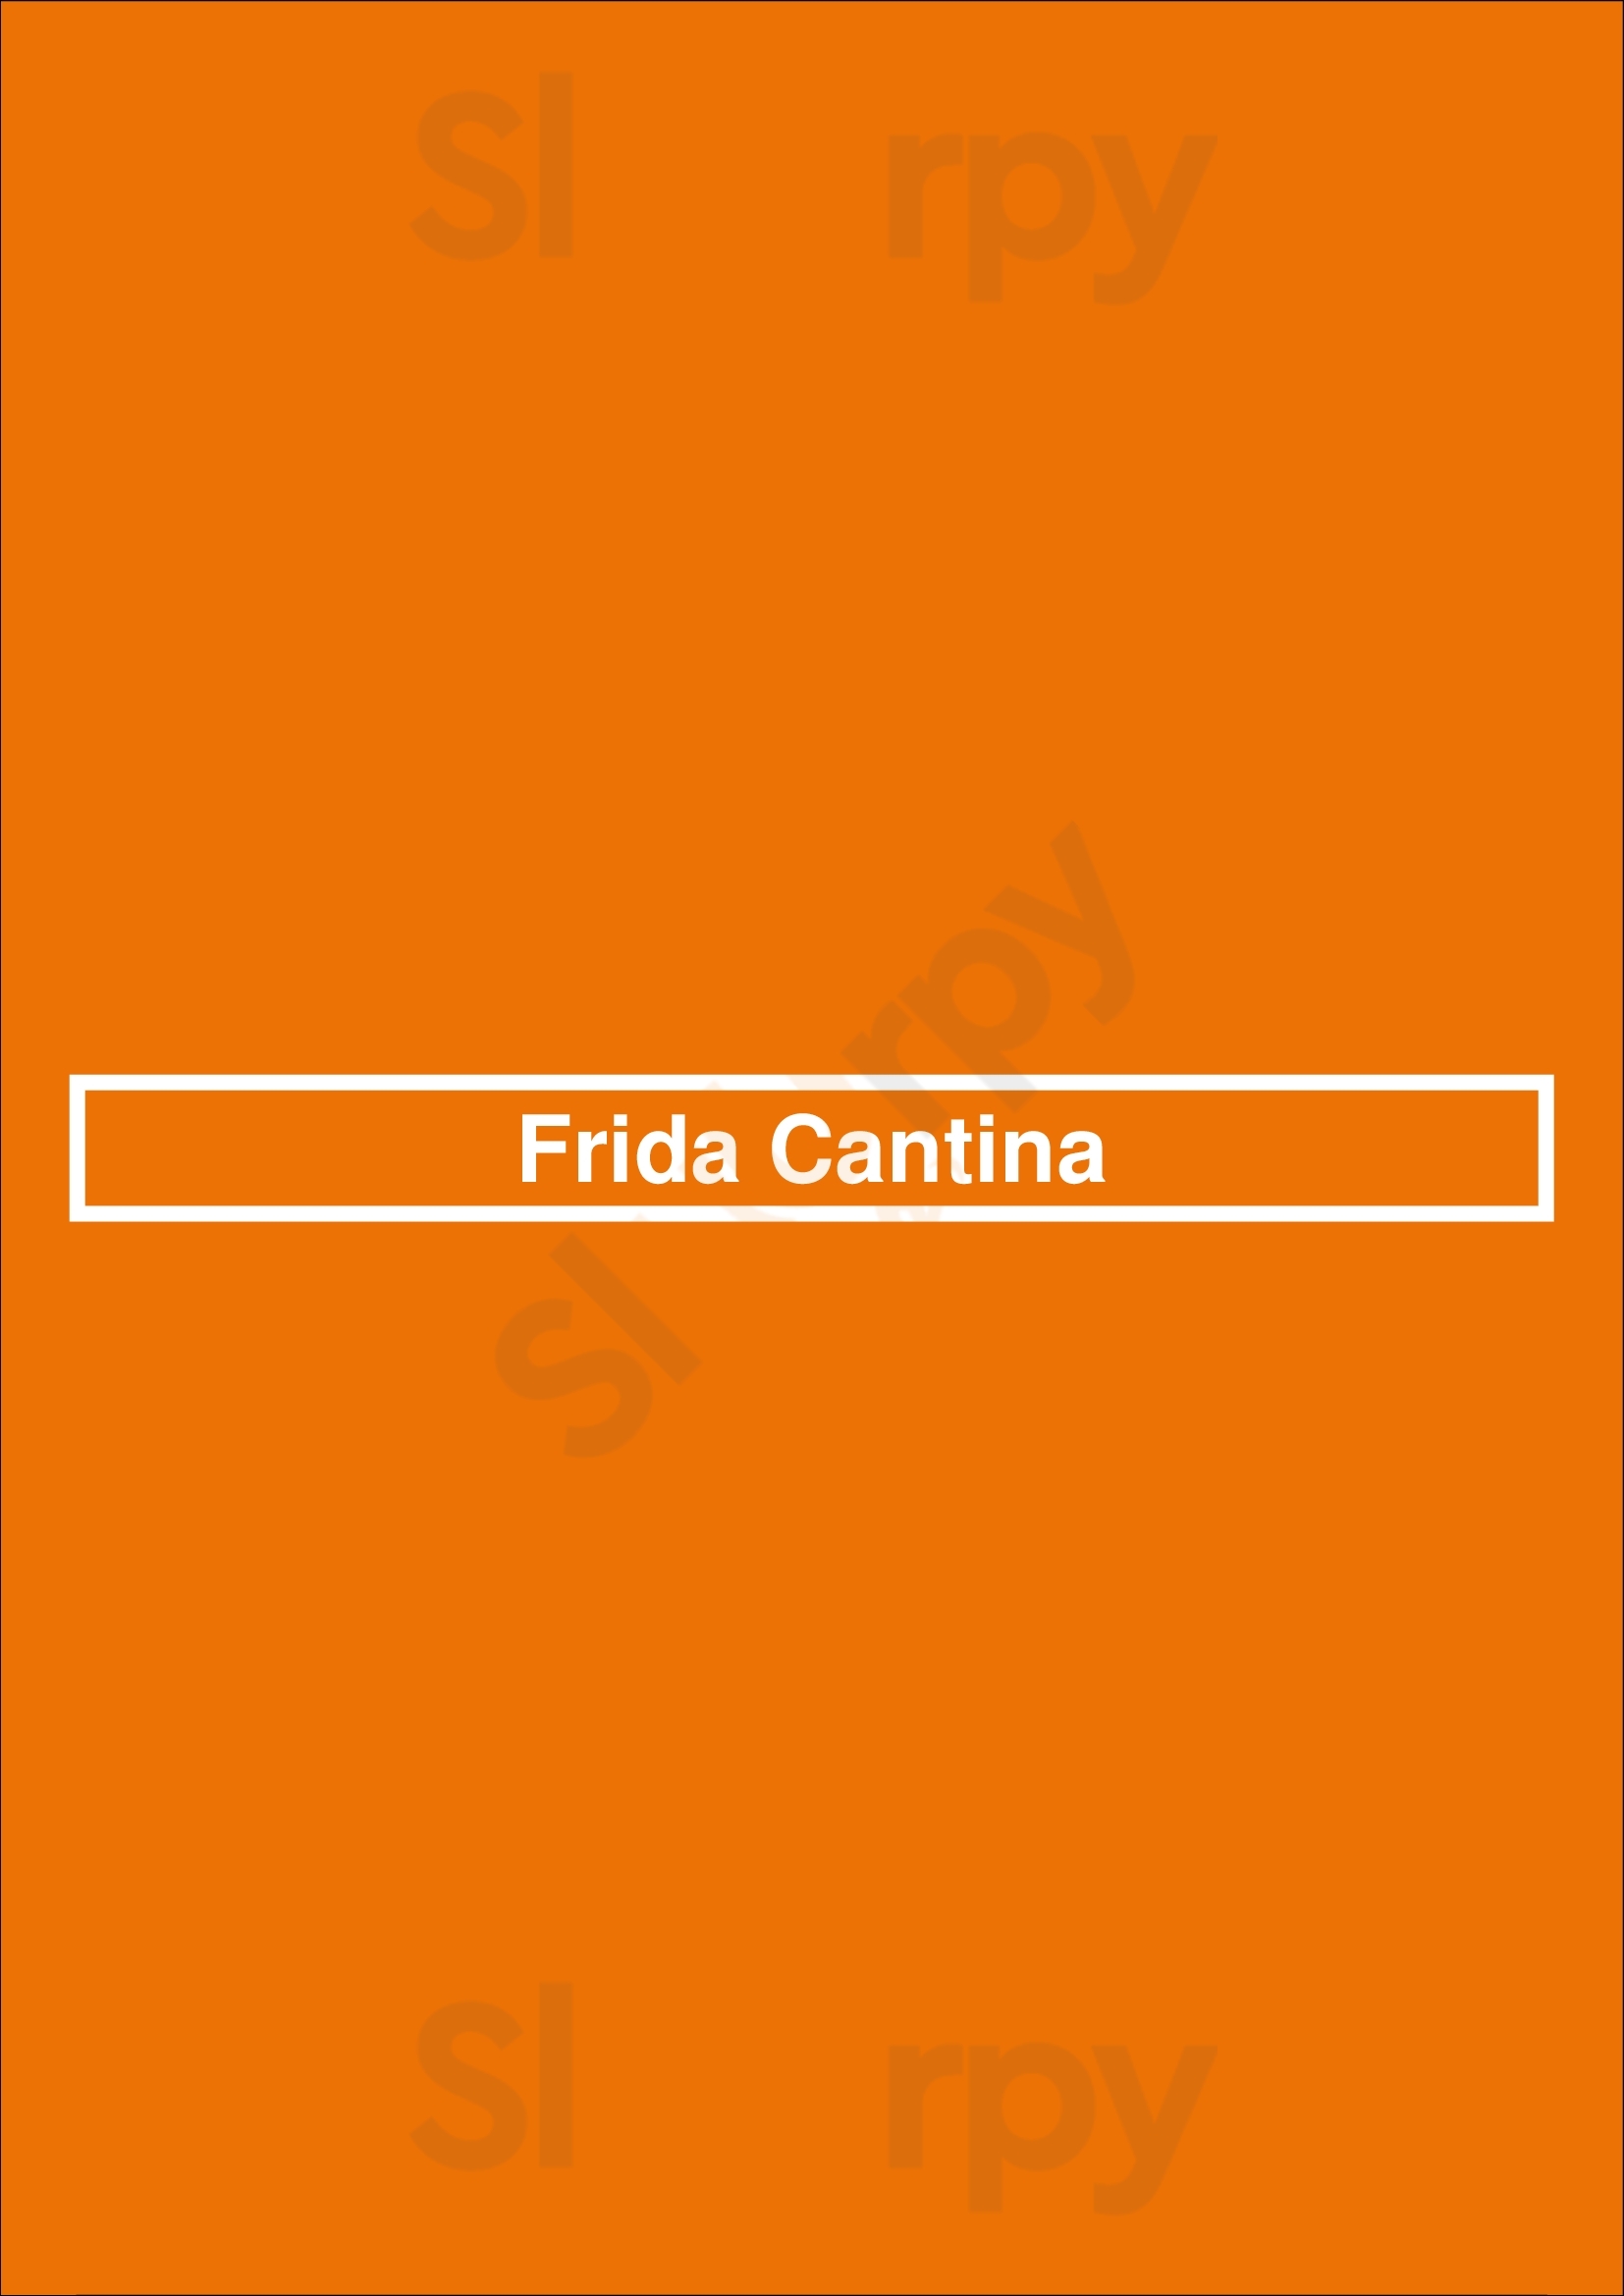 Frida Cantina Philadelphia Menu - 1